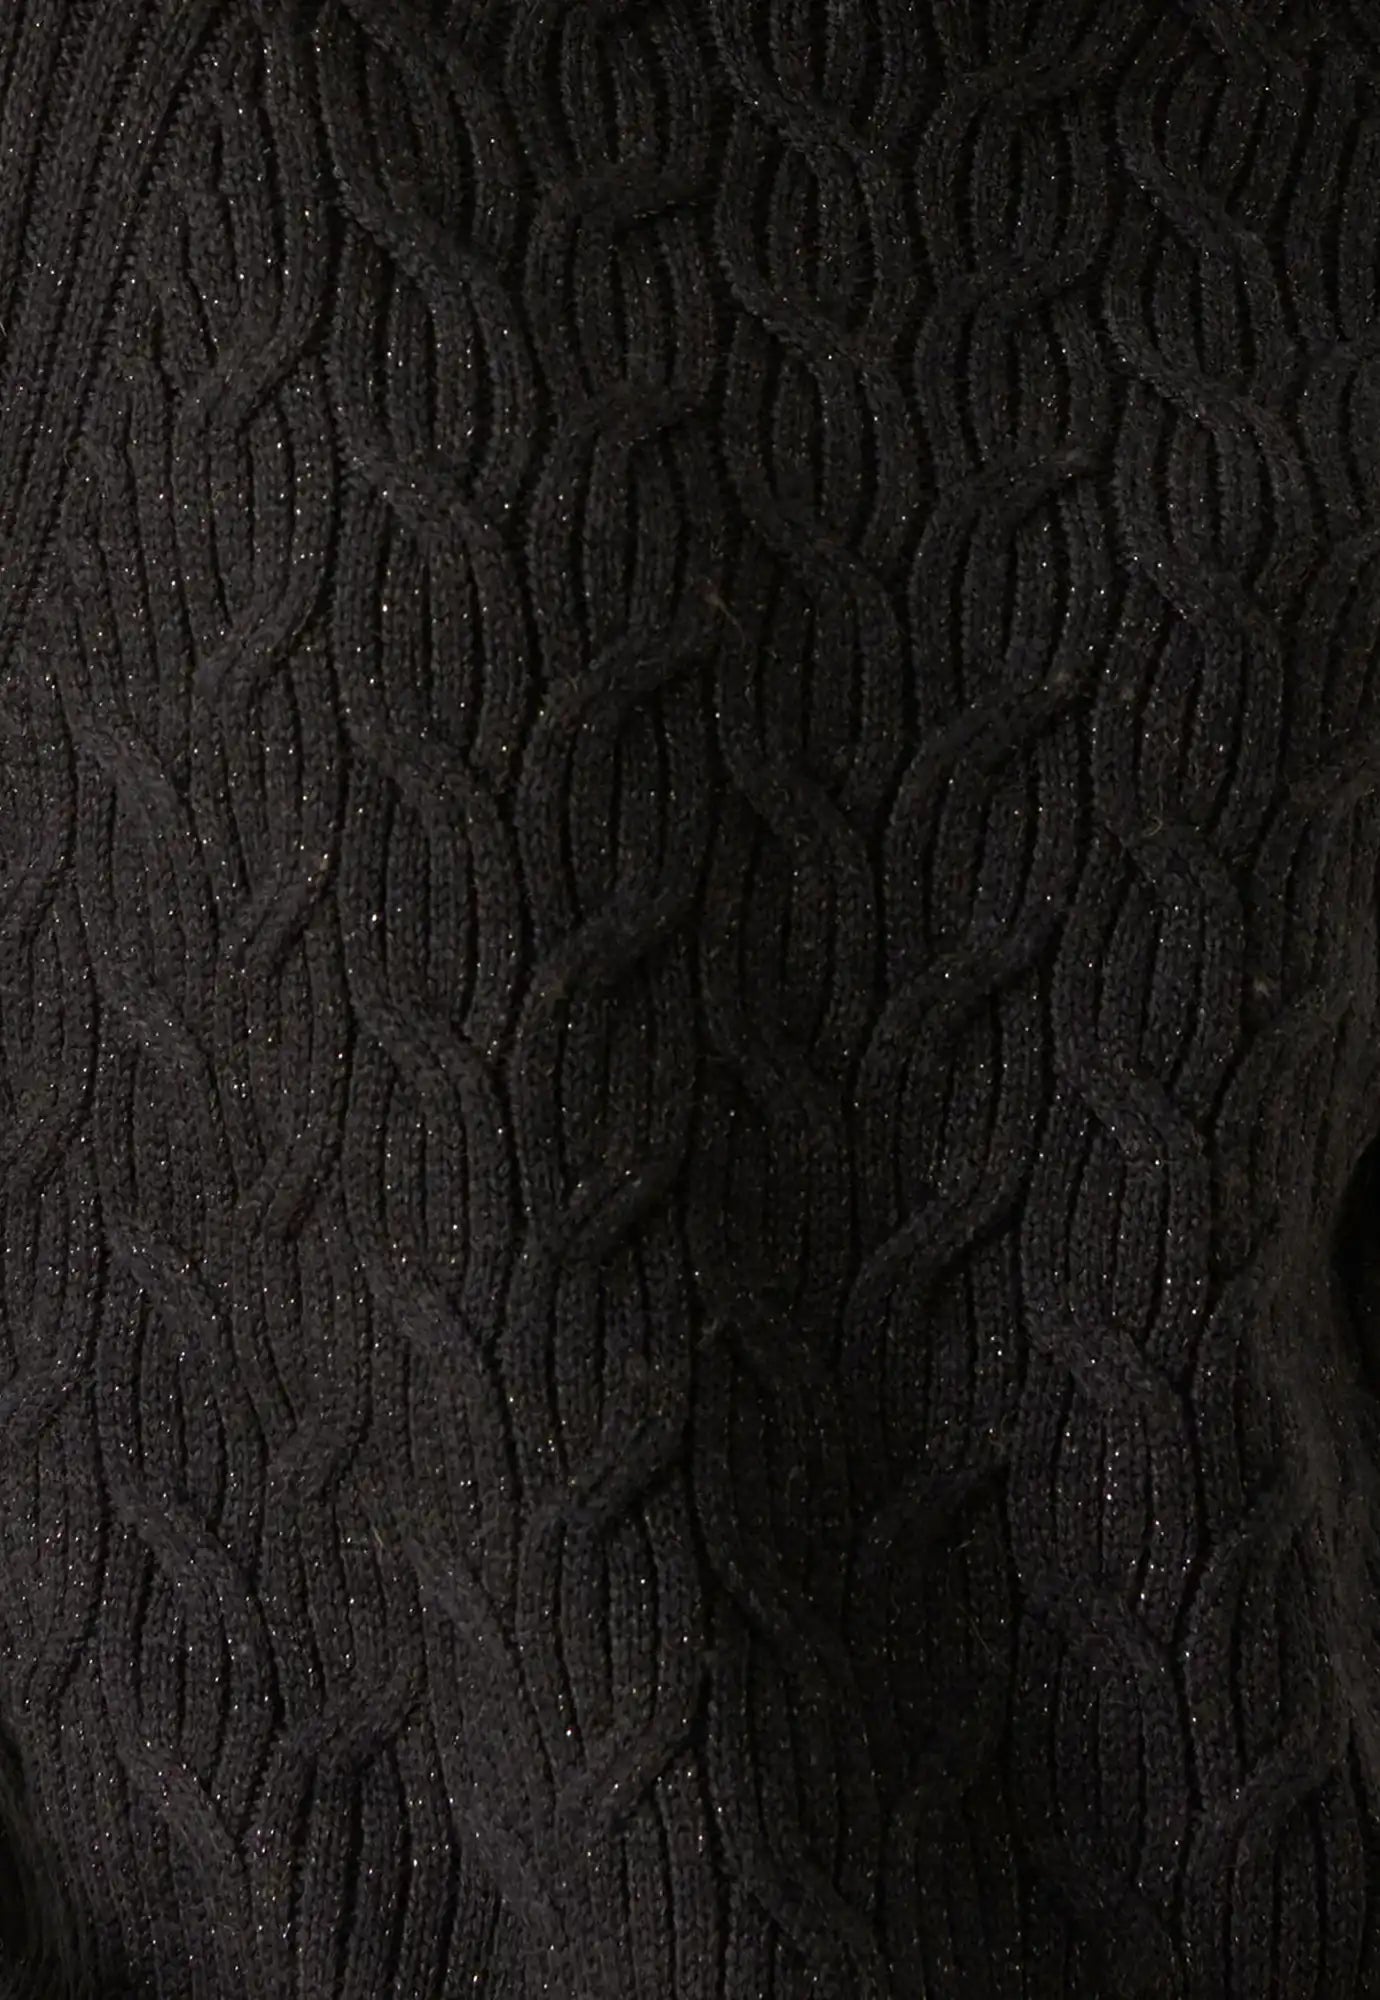 pol - bennet lurex cable knit - charcoal